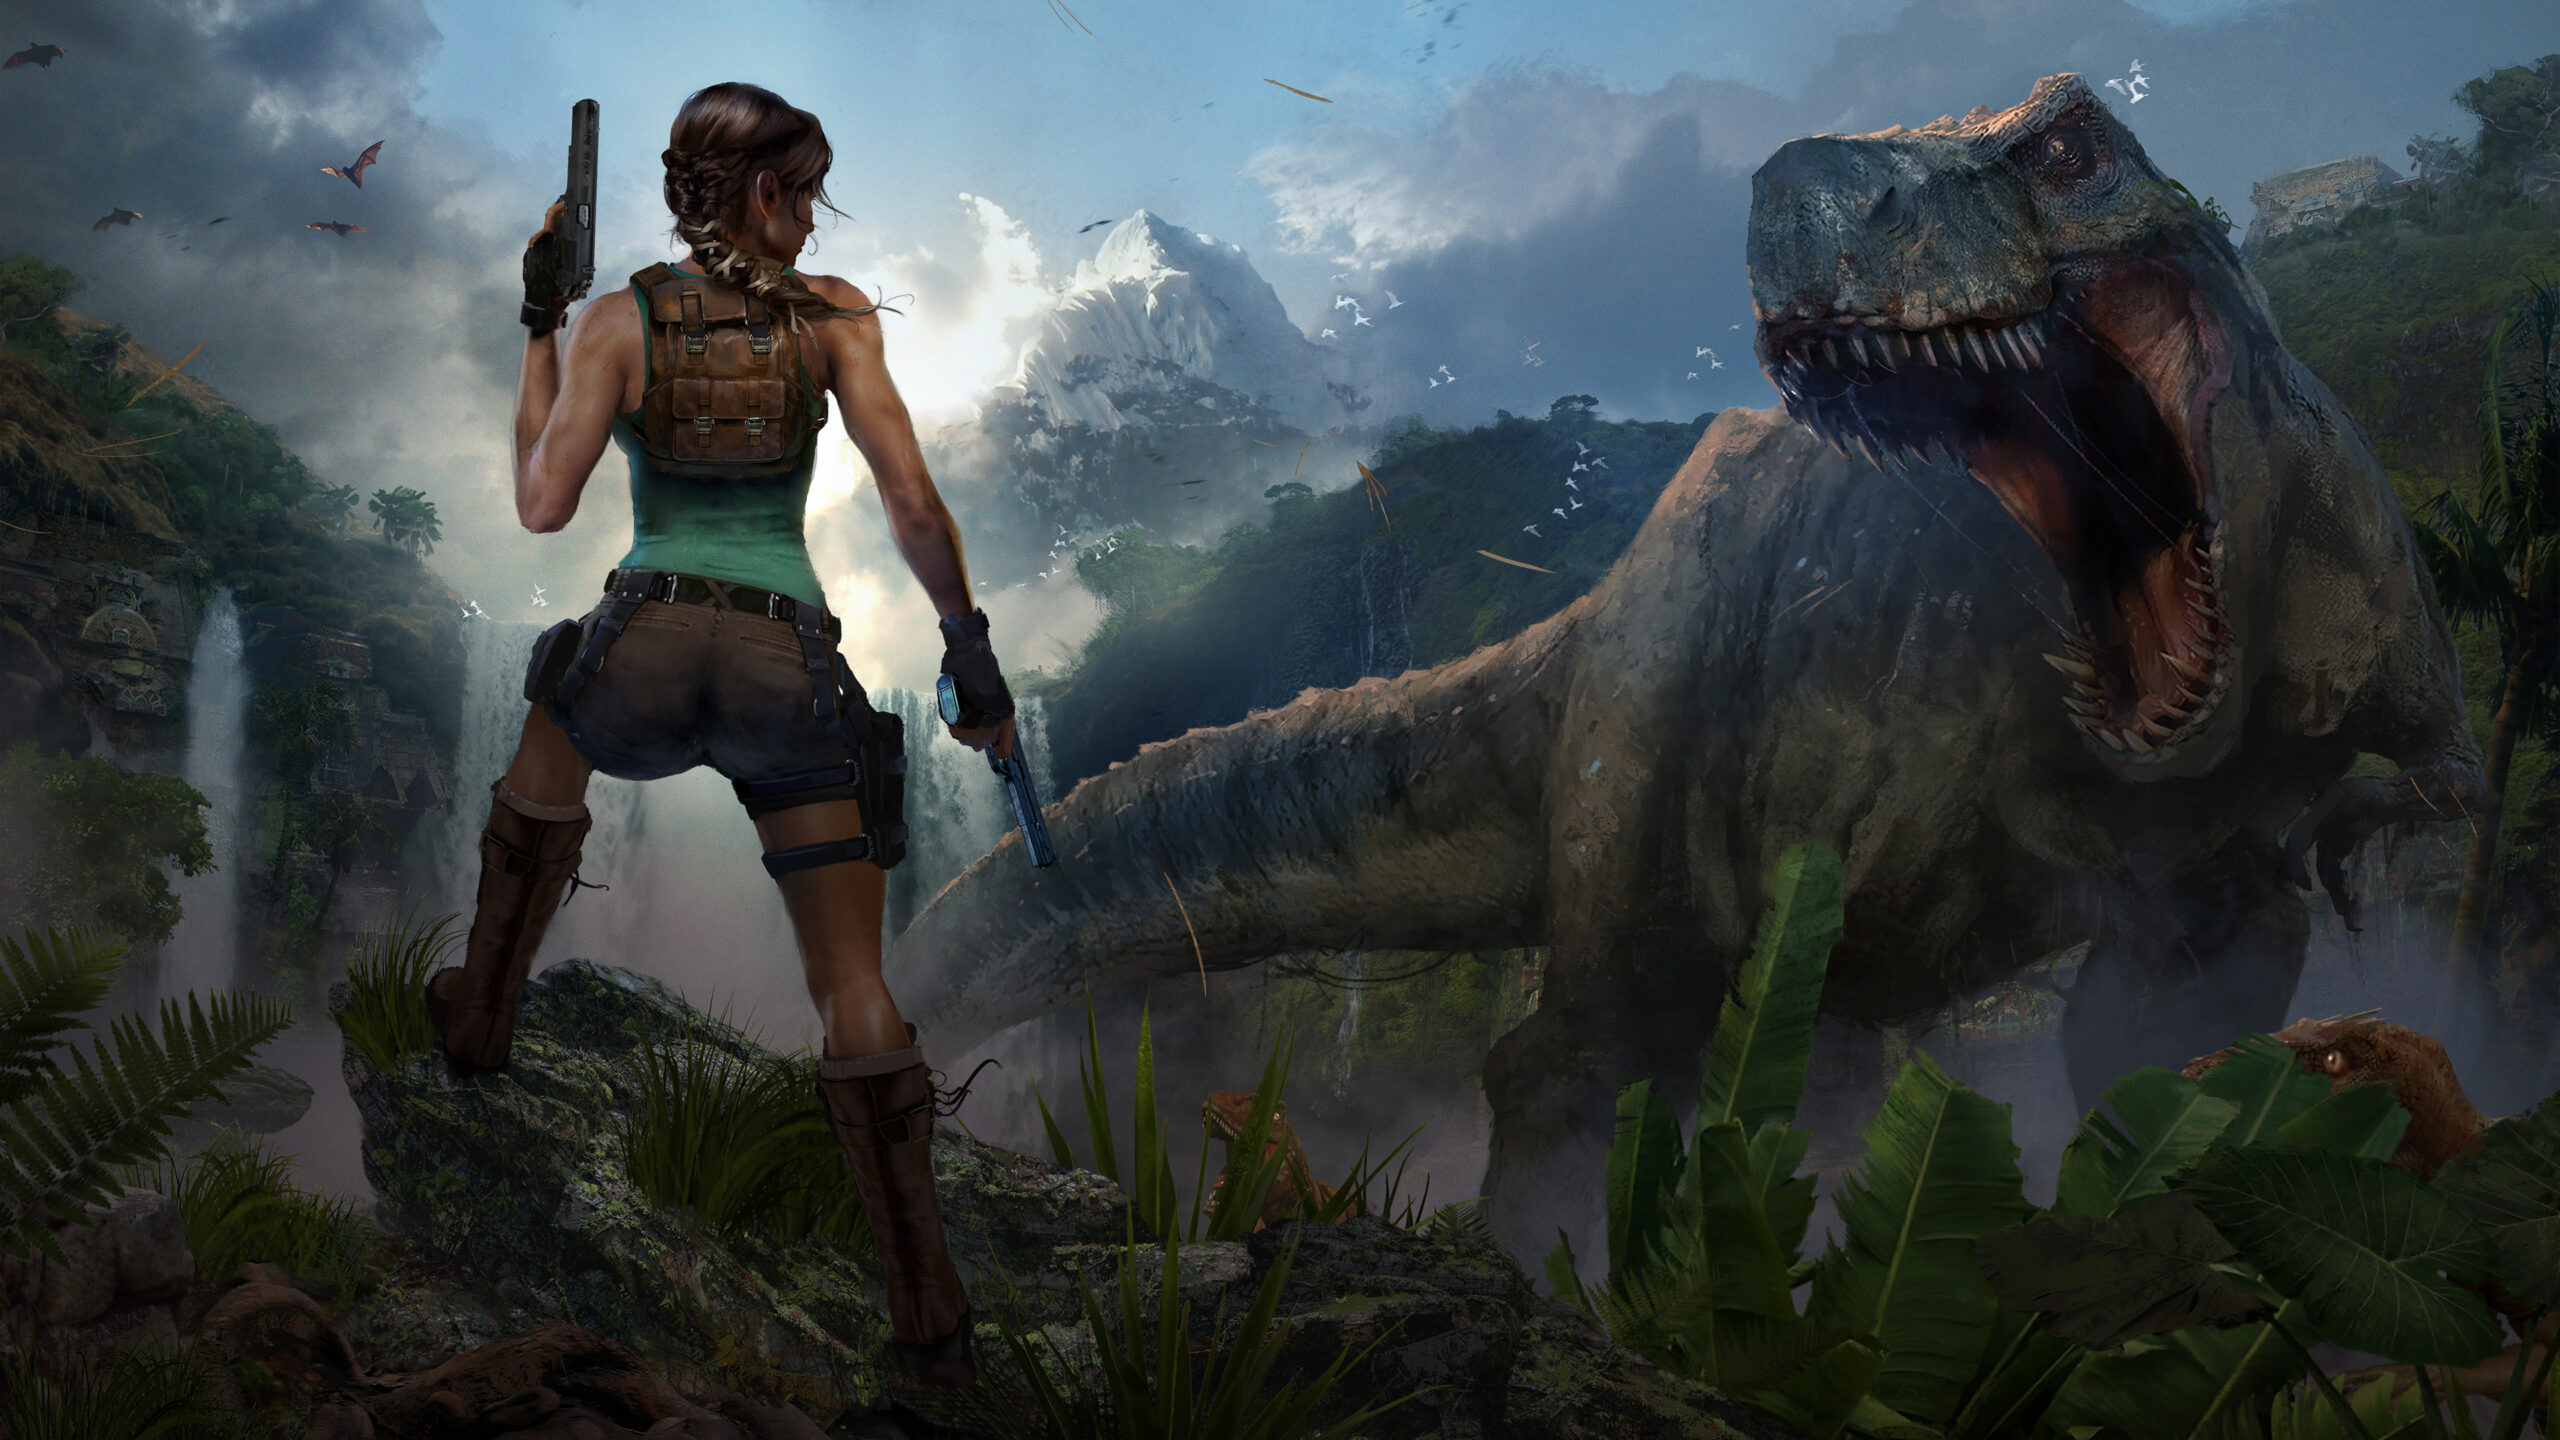 Tomb Raider visual Lara Croft